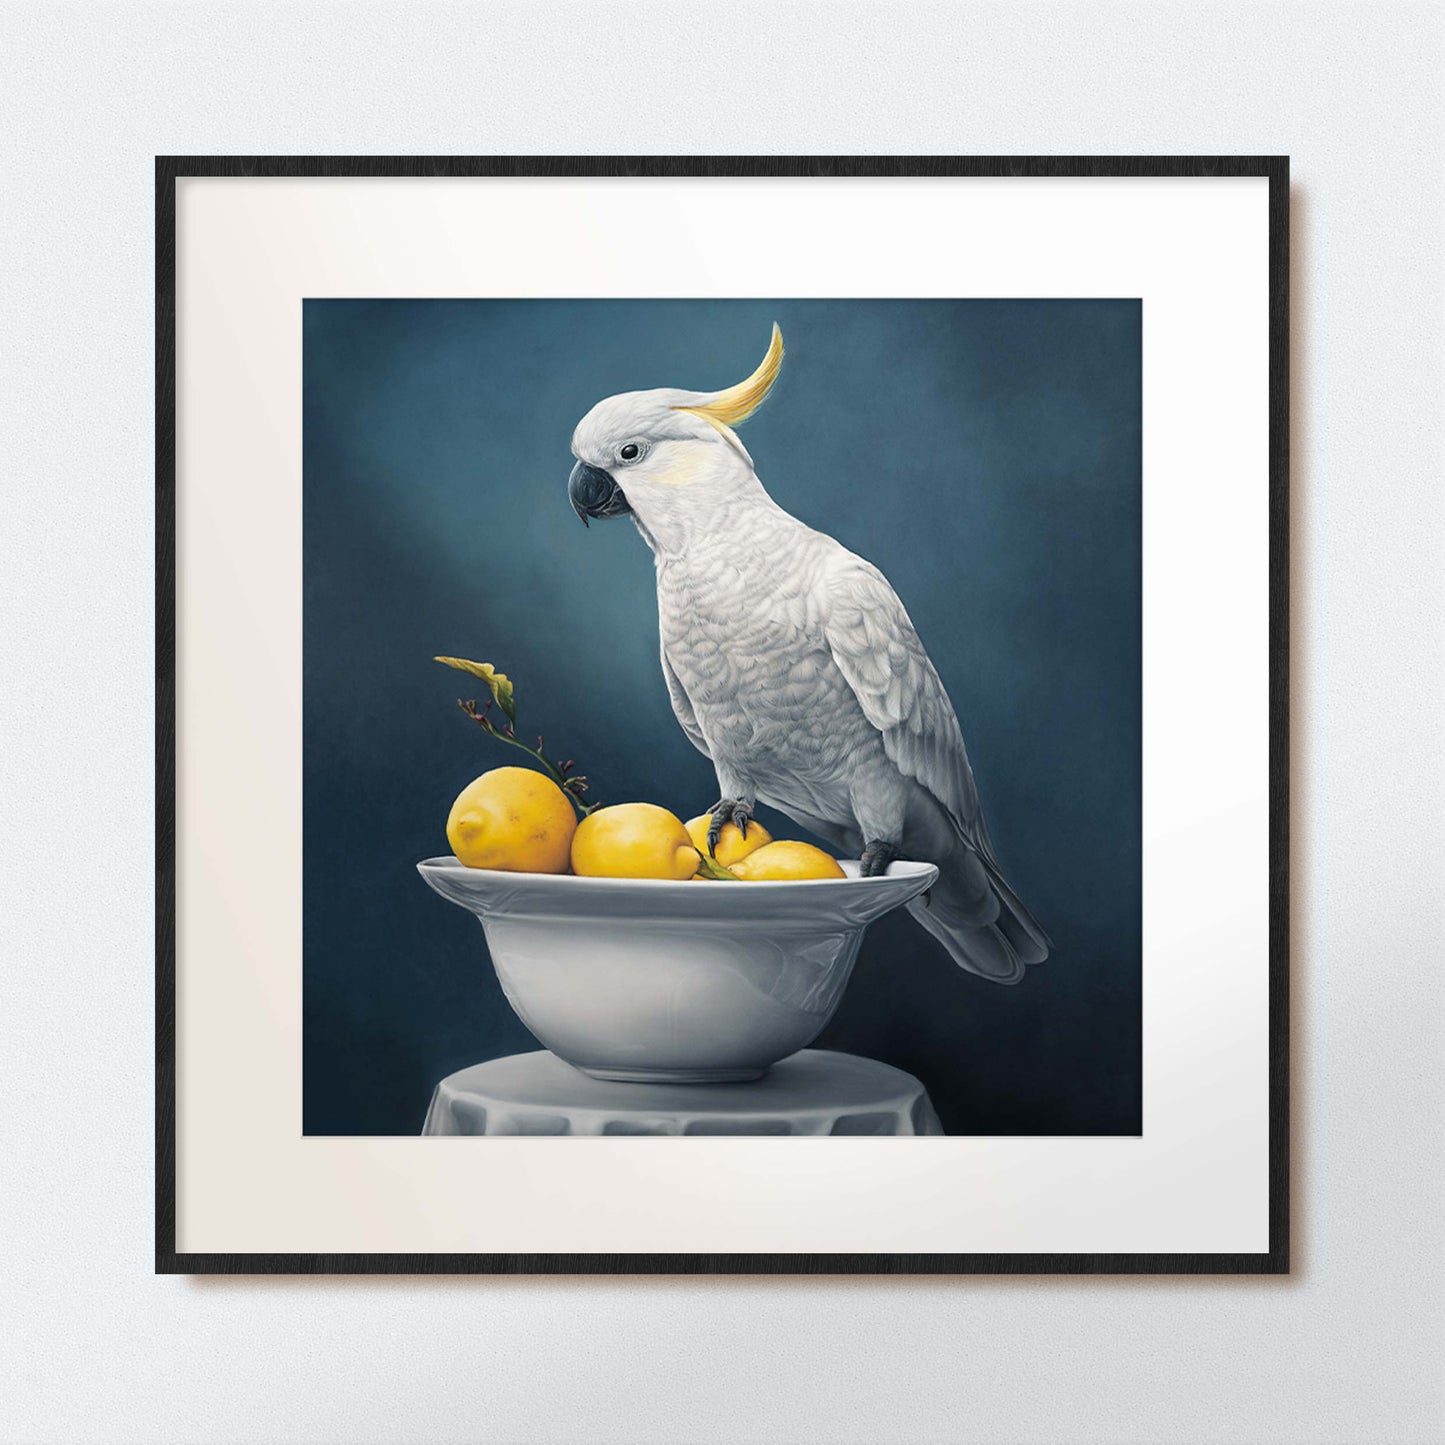 Framed artwork of a white cockatoo sitting on a bowl of lemons